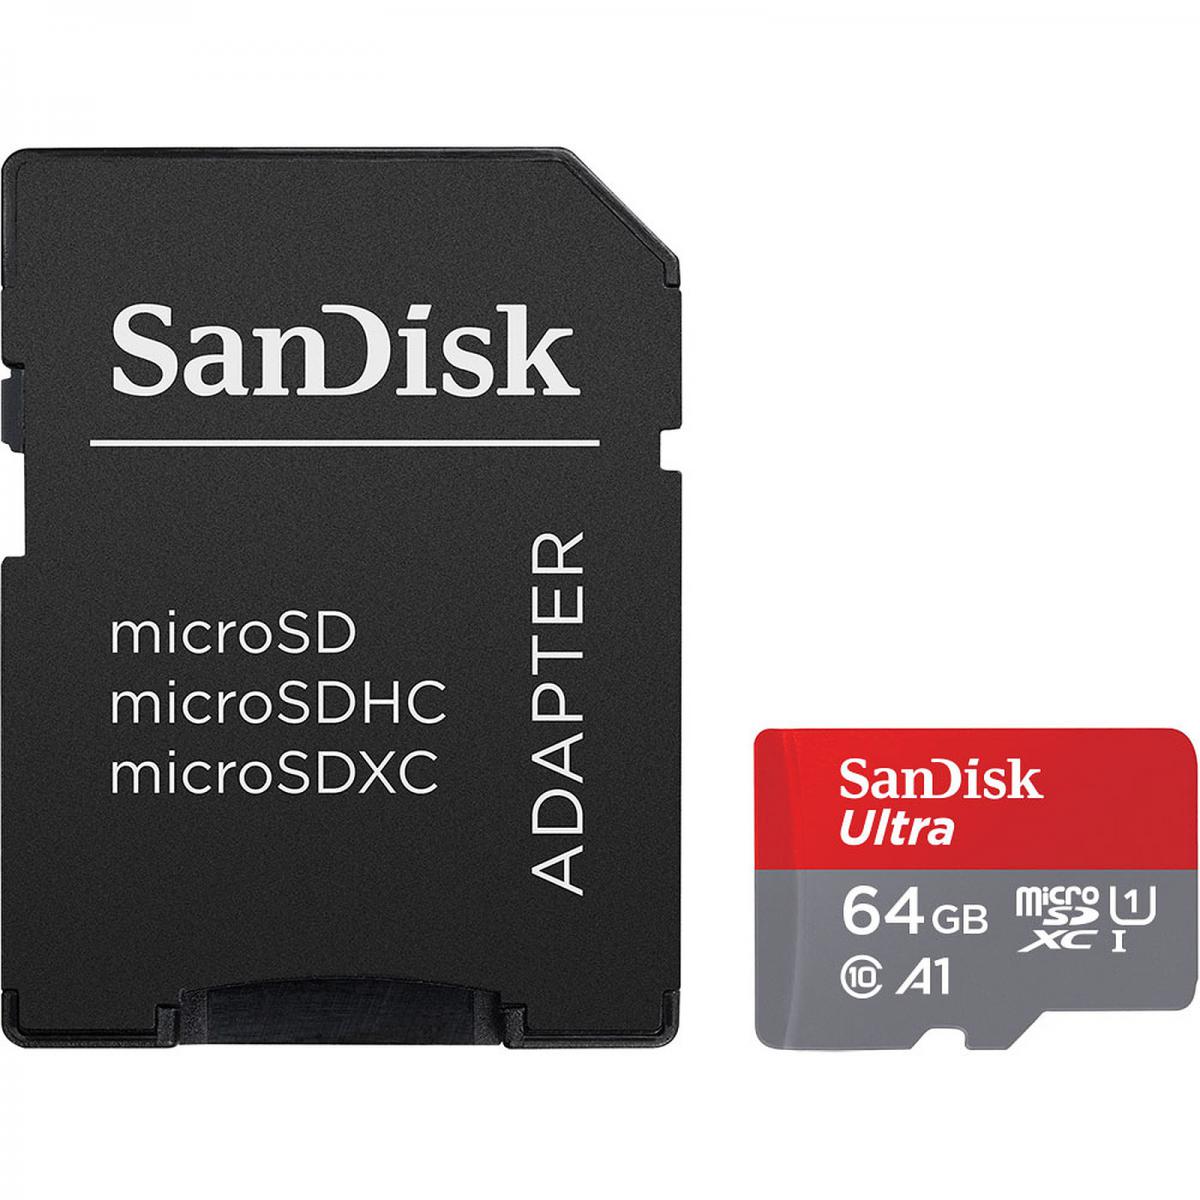 Sandisk - Scheda di memoria Sandisk Ultra - Carte SD